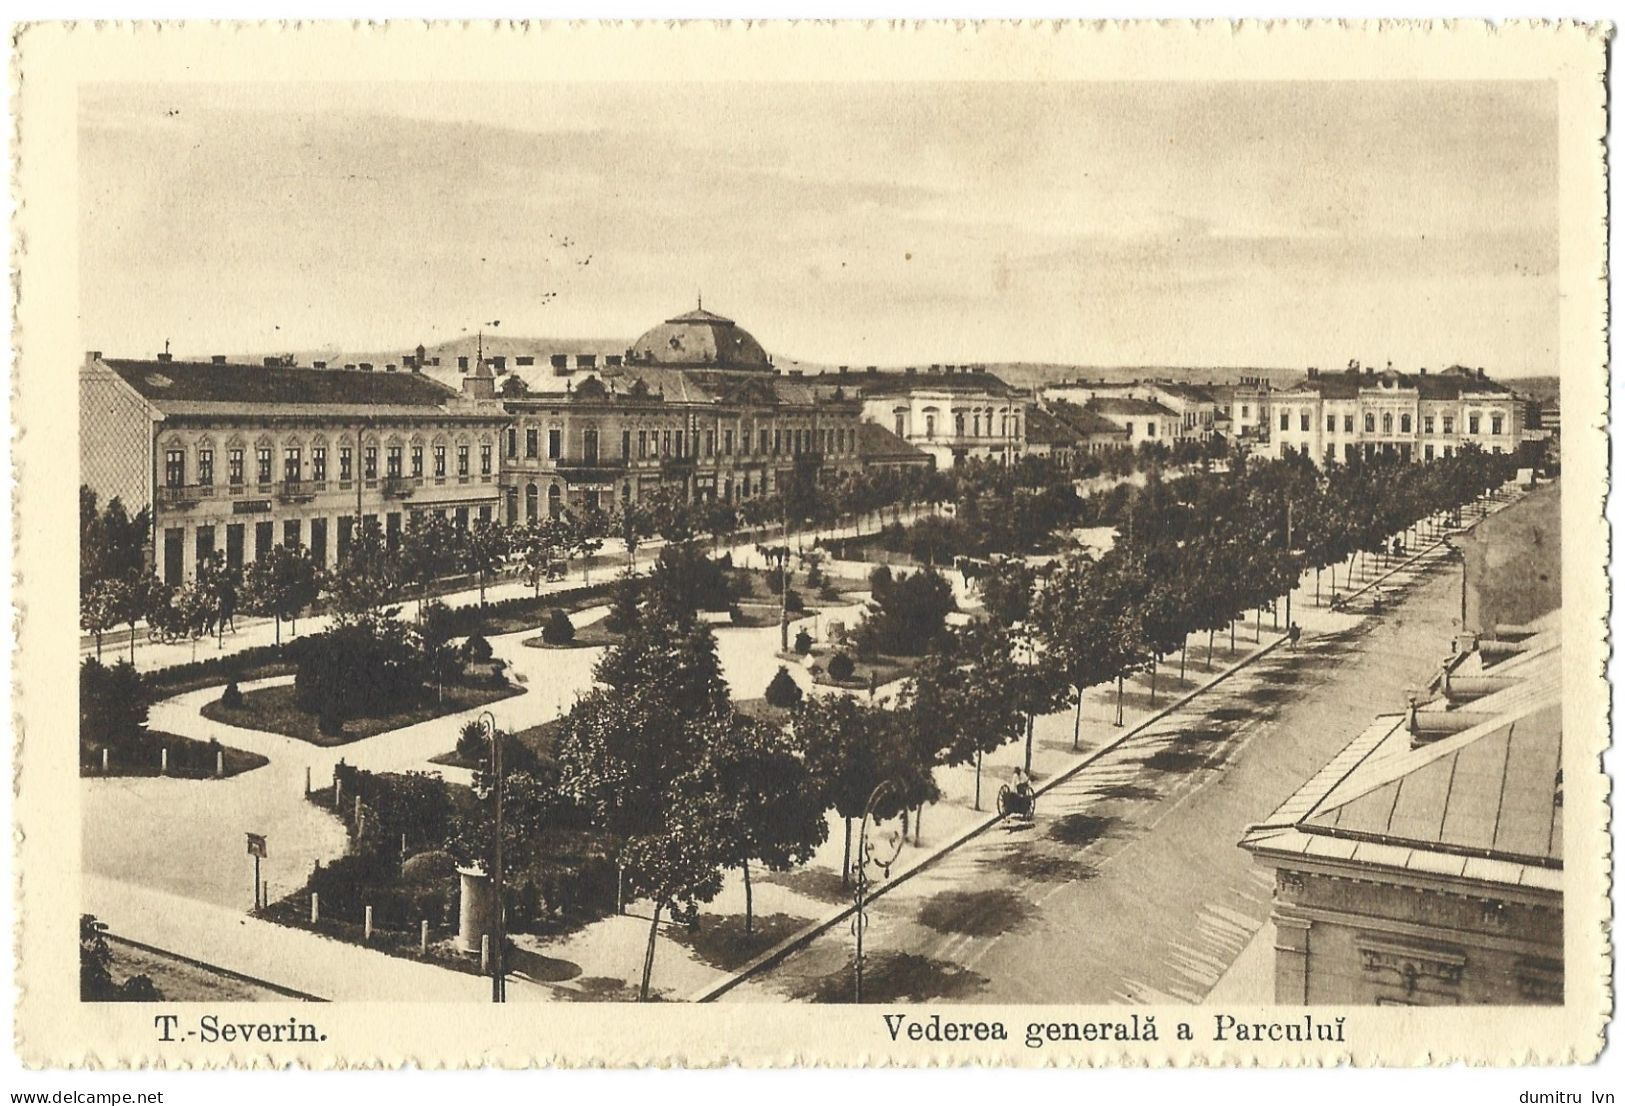 ROMANIA 1914 TURNU-SEVERIN - GENERAL VIEW OF THE PARK. BUILDINGS, ARCHITECTURE, PEOPLE - Romania